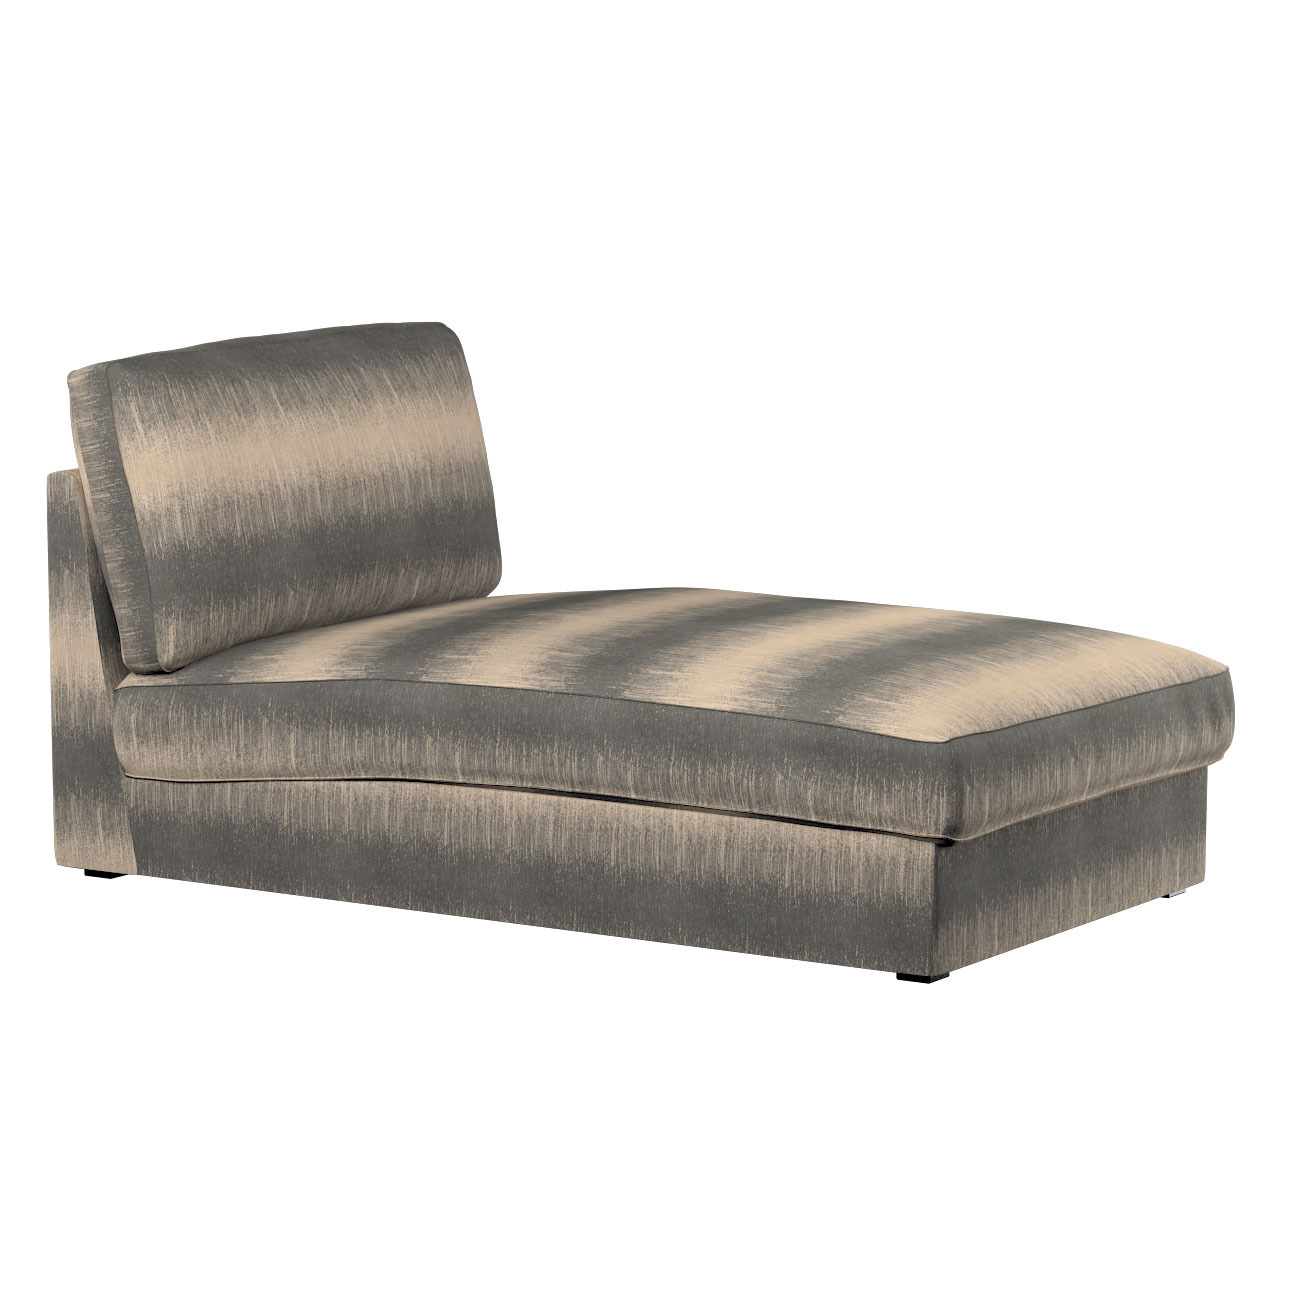 Bezug für Kivik Recamiere Sofa, grau-beige, Bezug für Kivik Recamiere, Livi günstig online kaufen